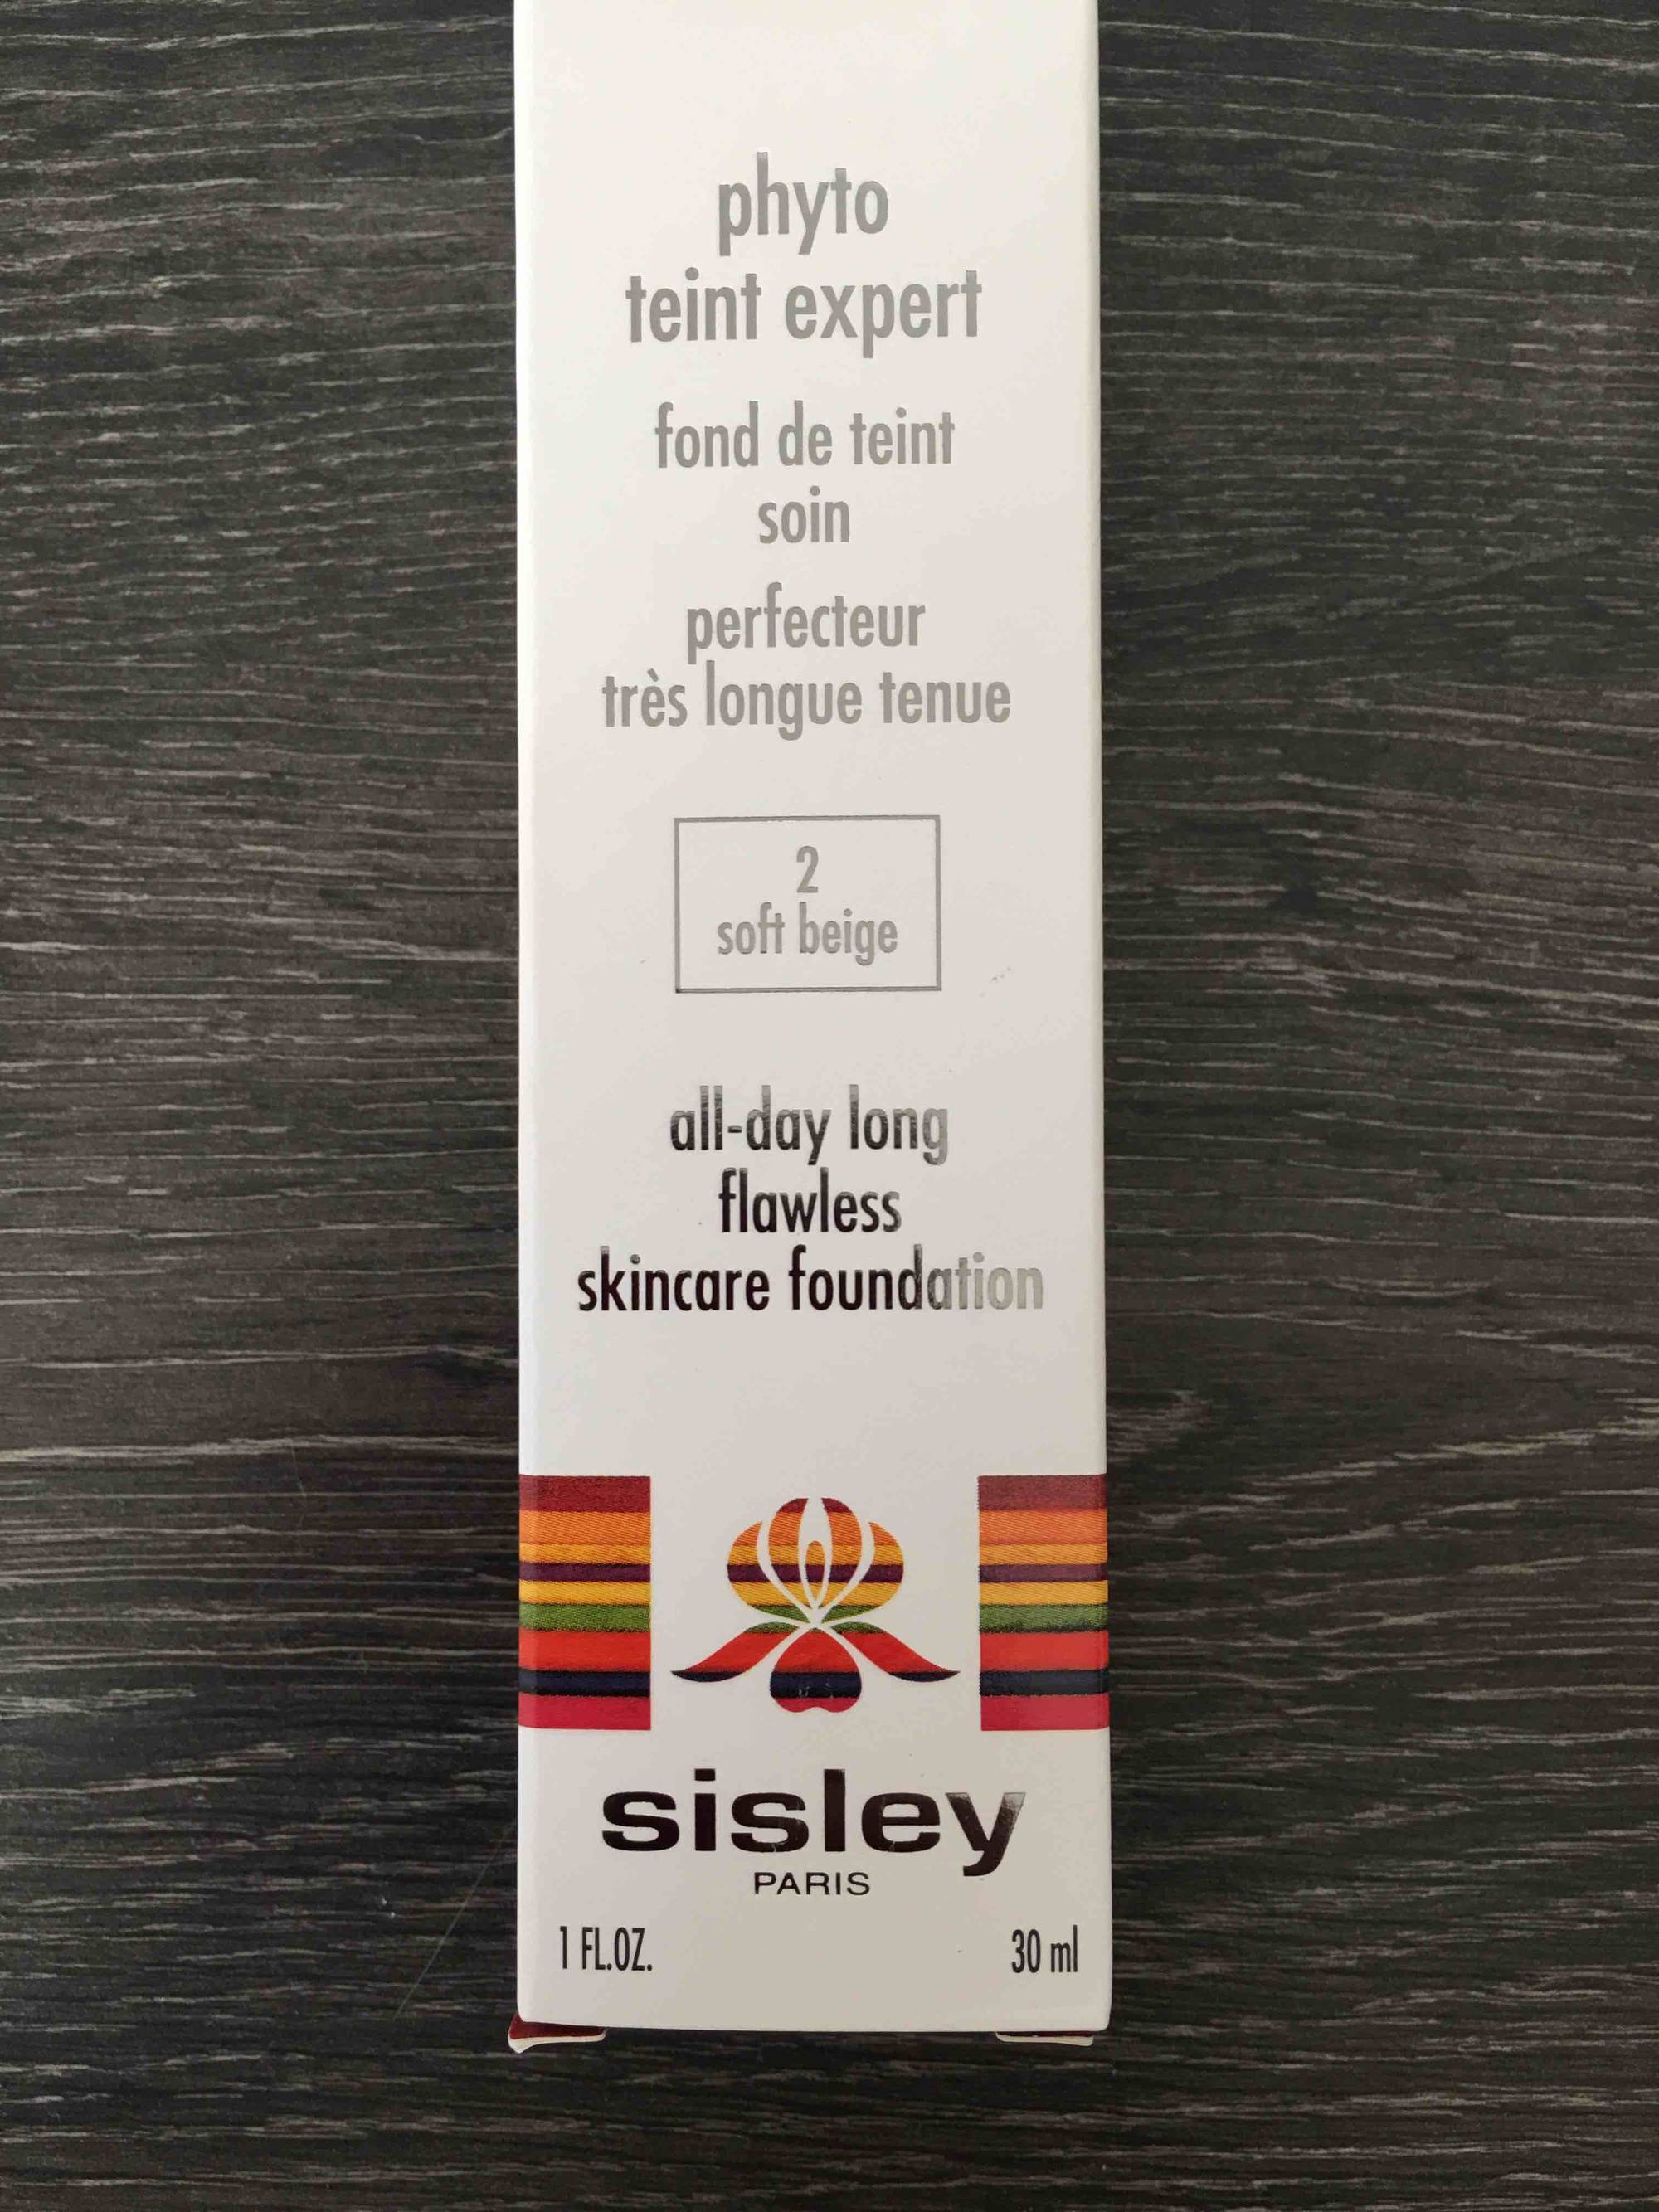 SISLEY - Phyto teint expert - Fond de teint 2 soft beige